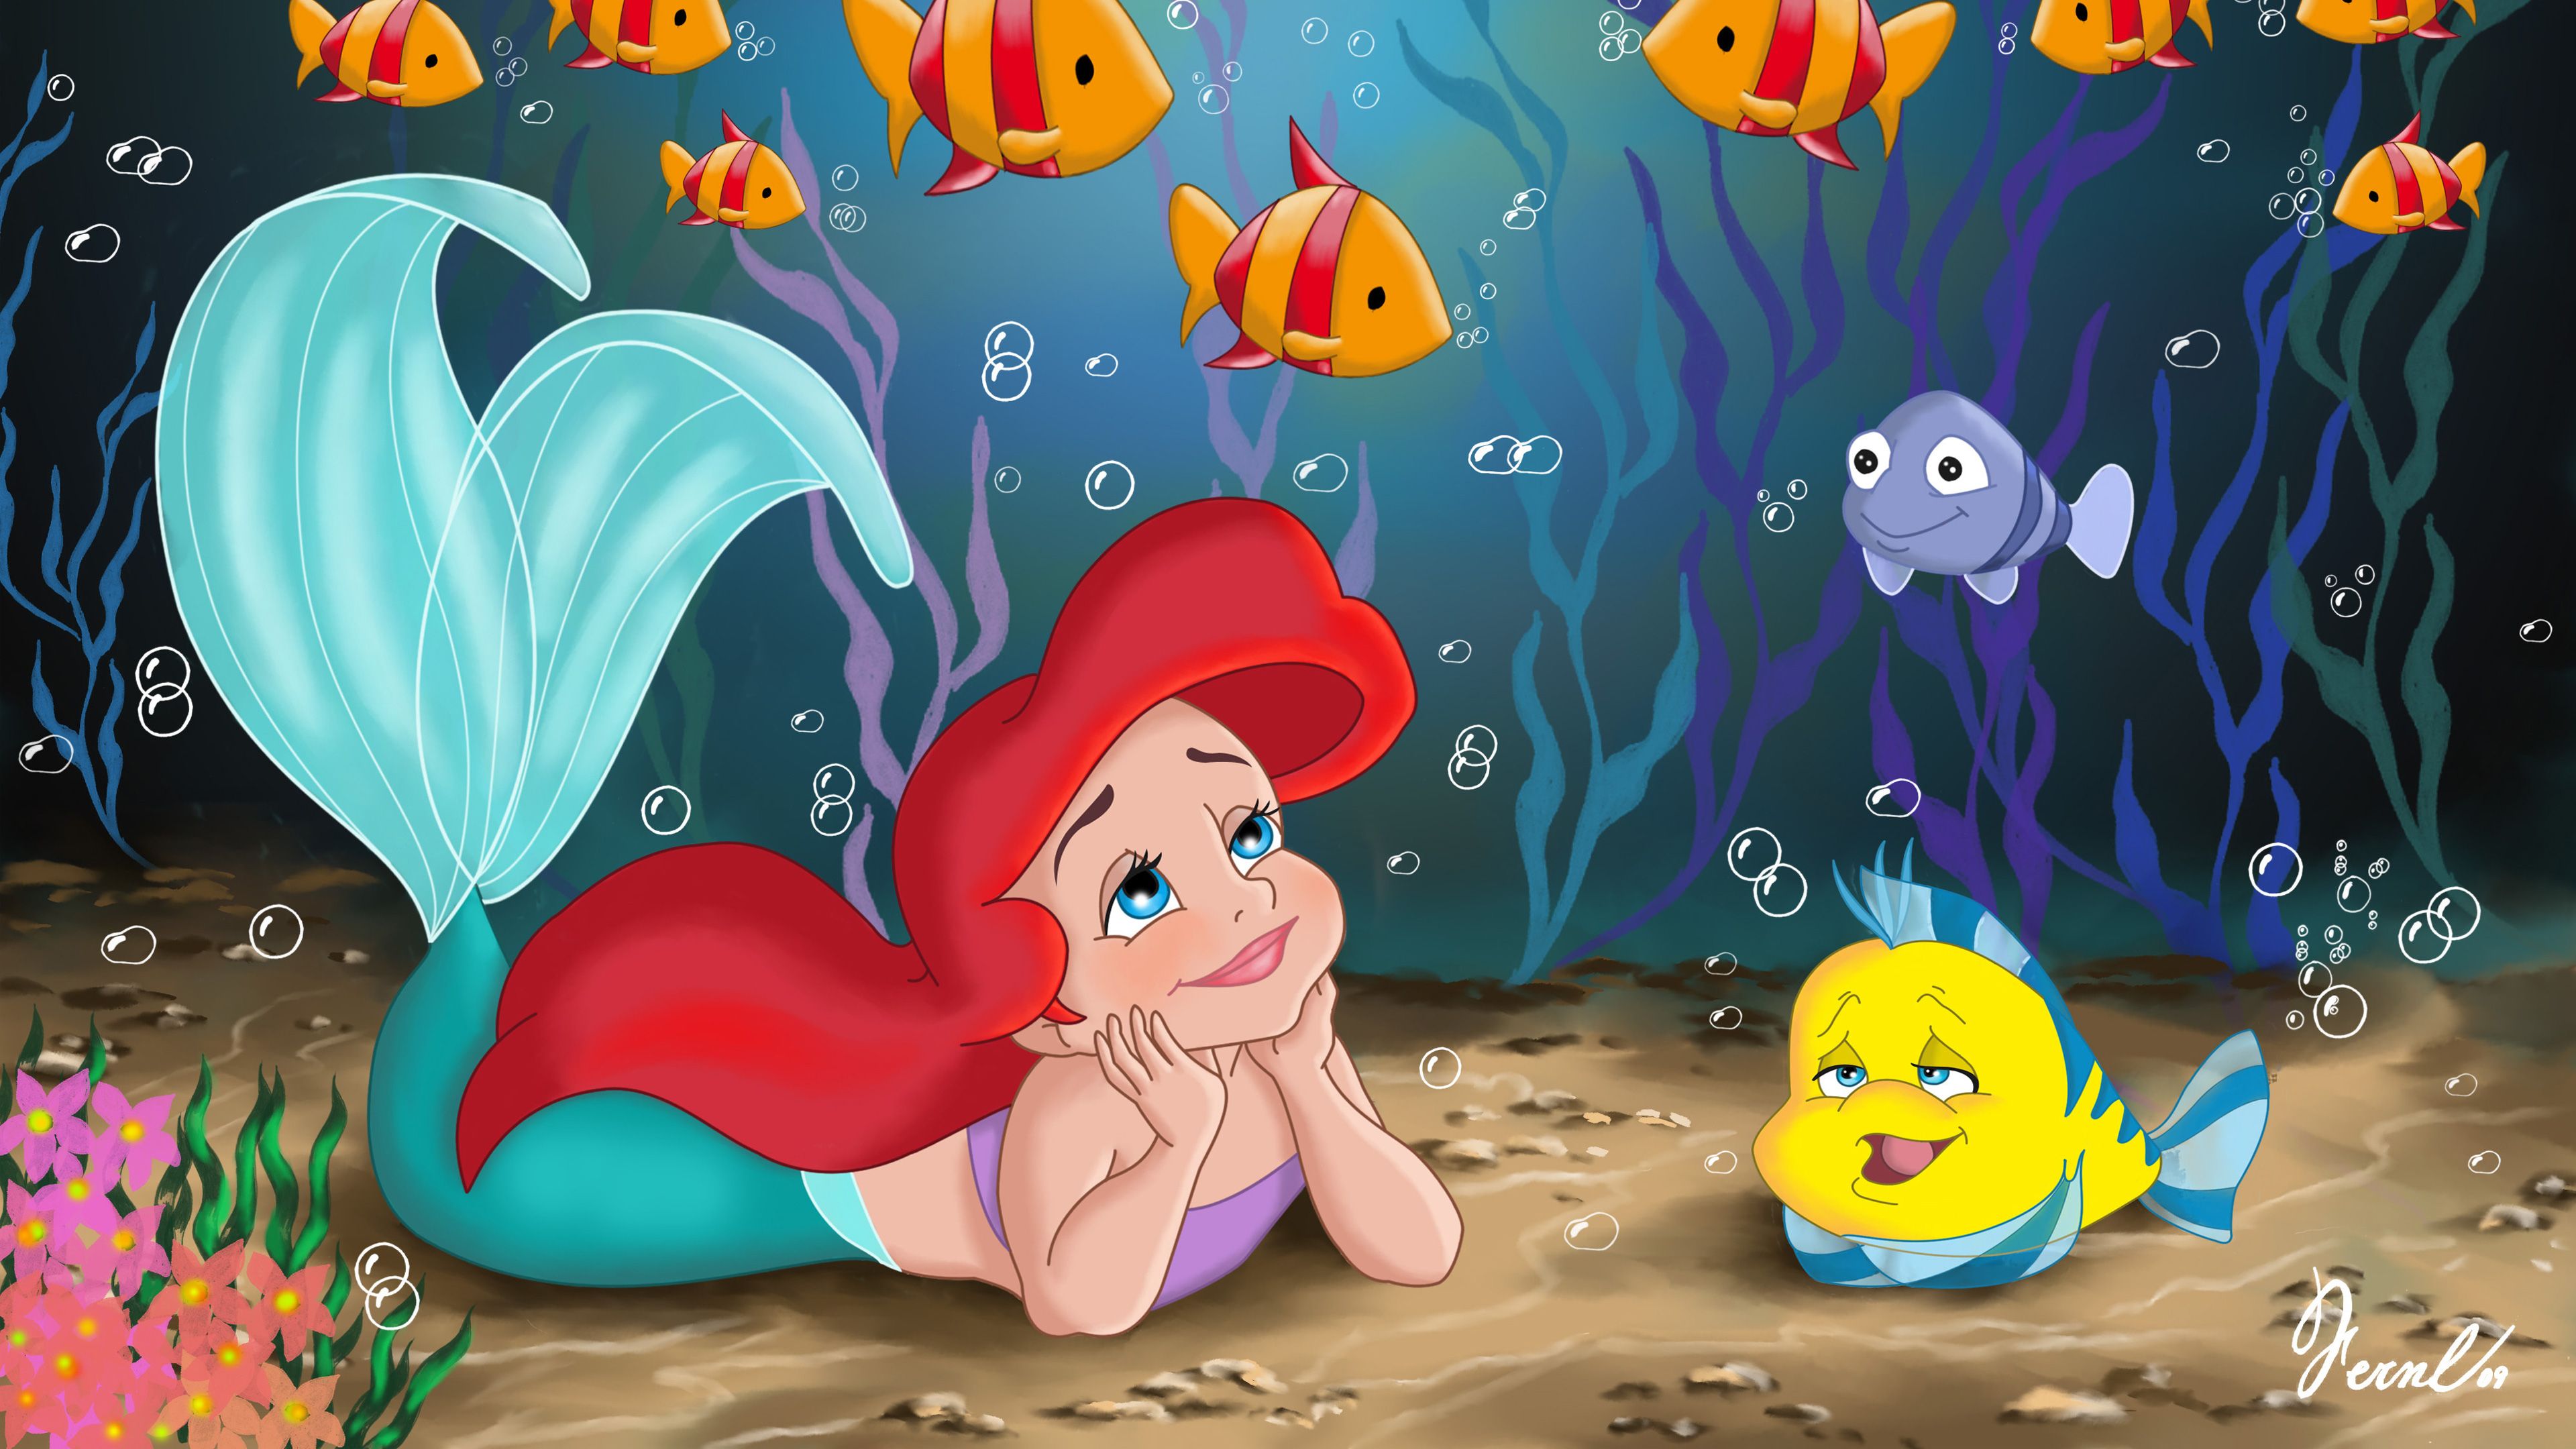 Mermaid 4K wallpaper for your desktop or mobile screen free